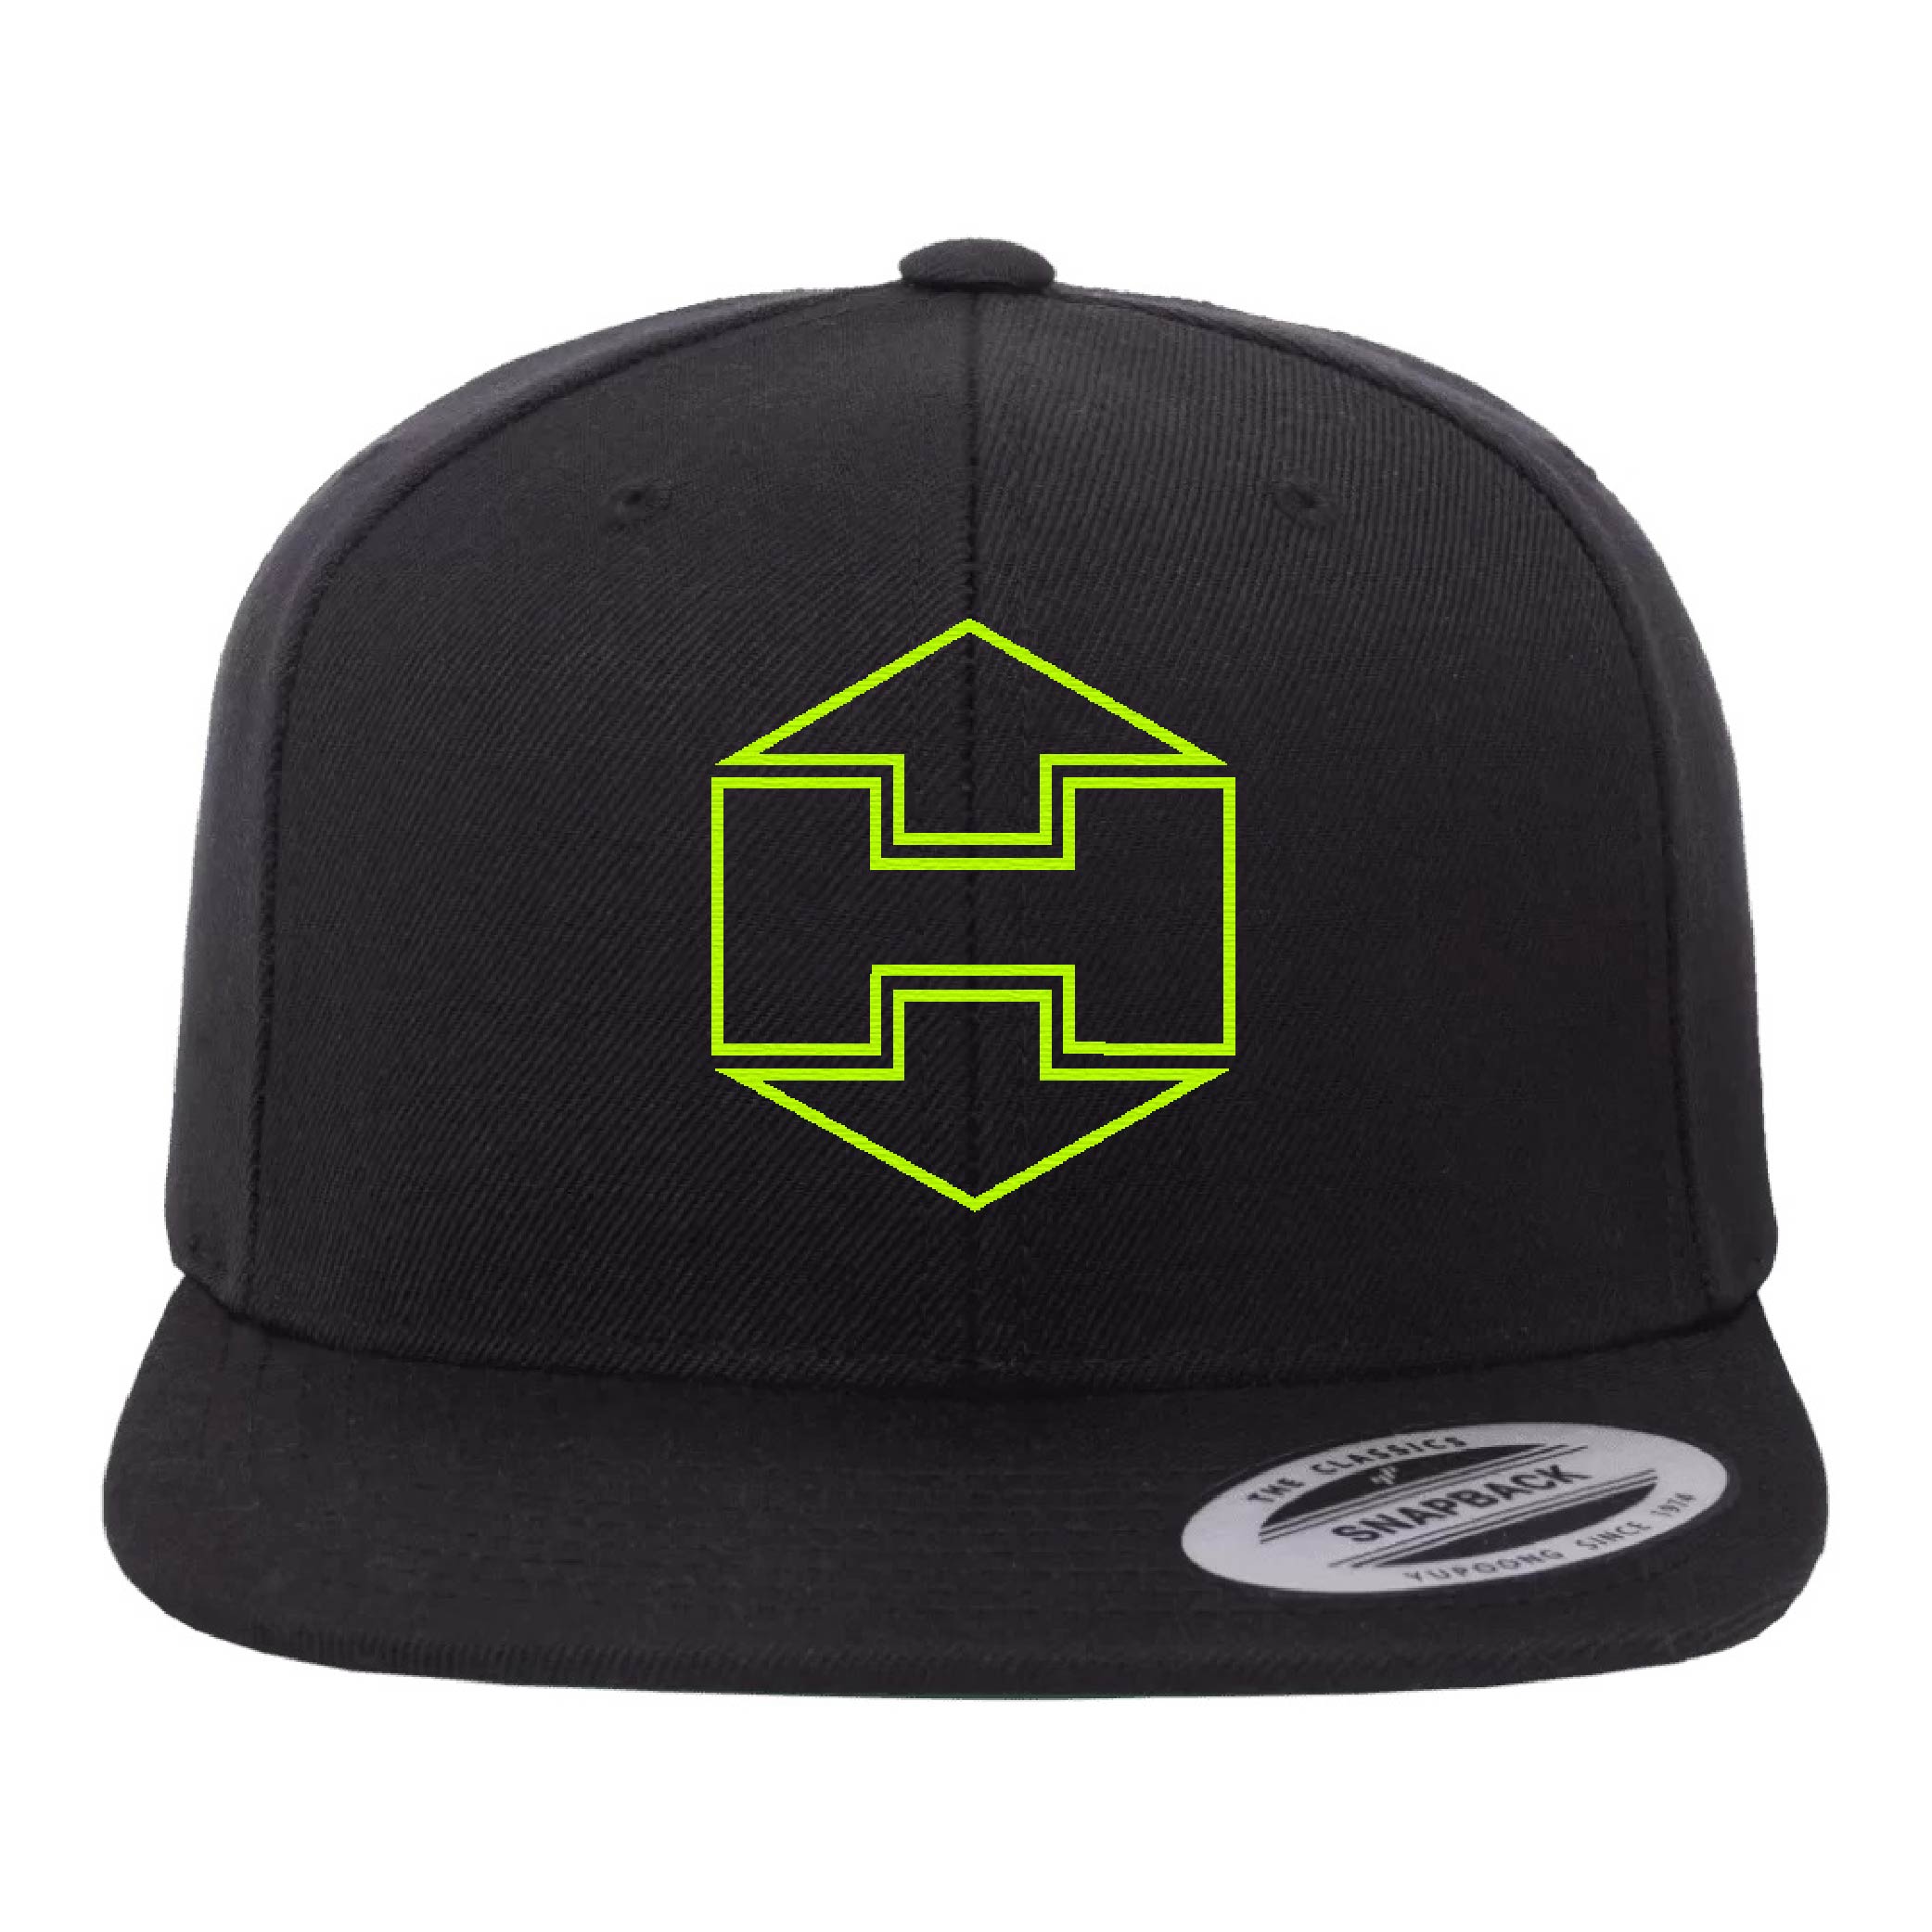 Black Snapback Hat w/ Neon Yellow HEXTAT Badge